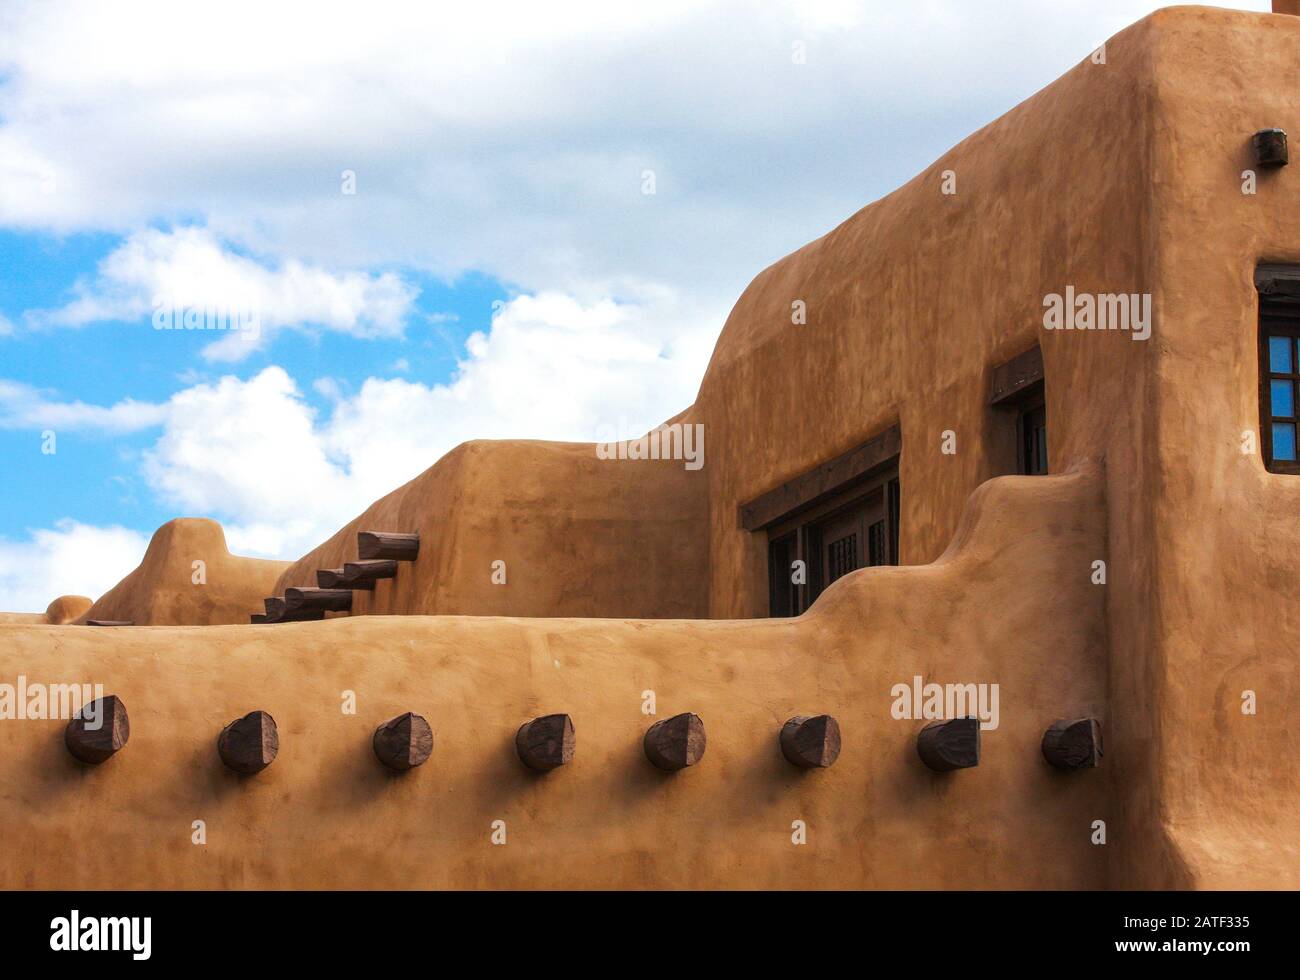 Pueblo adobe Stuckstuck Gebäude. Konturierte lehmziegelarchitektur mit Holzvigas. Santa Fe, New Mexico, USA Stockfoto